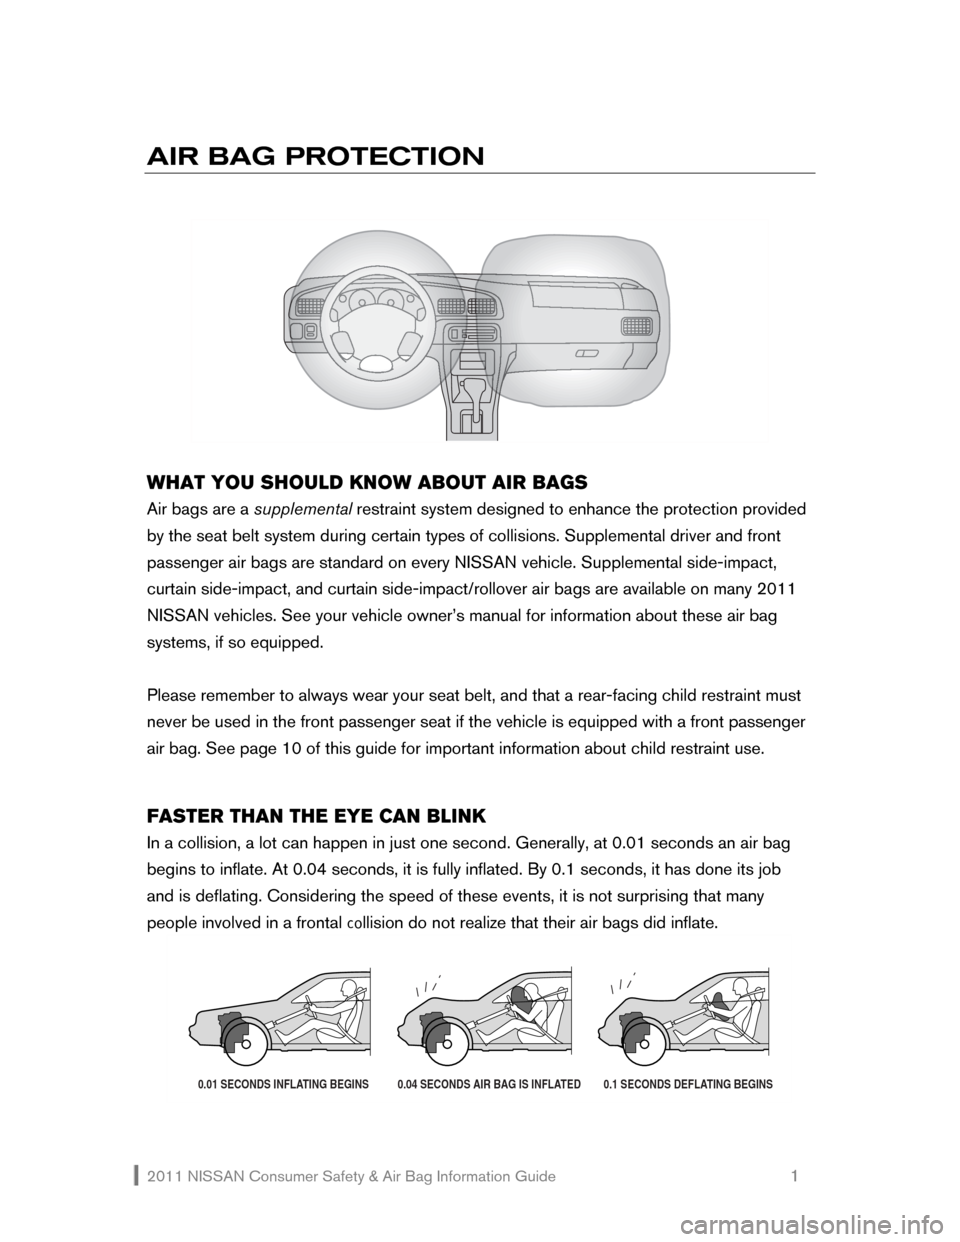 NISSAN XTERRA 2011 N50 / 2.G Consumer Safety Air Bag Information Guide 2011 NISSAN Consumer Safety & Air Bag Information Guide                                                       1 
AIR BAG PROTECTION 
    
 
 
WHAT YOU SHOULD KNOW ABOUT AIR BAGS 
Air bags are a supple